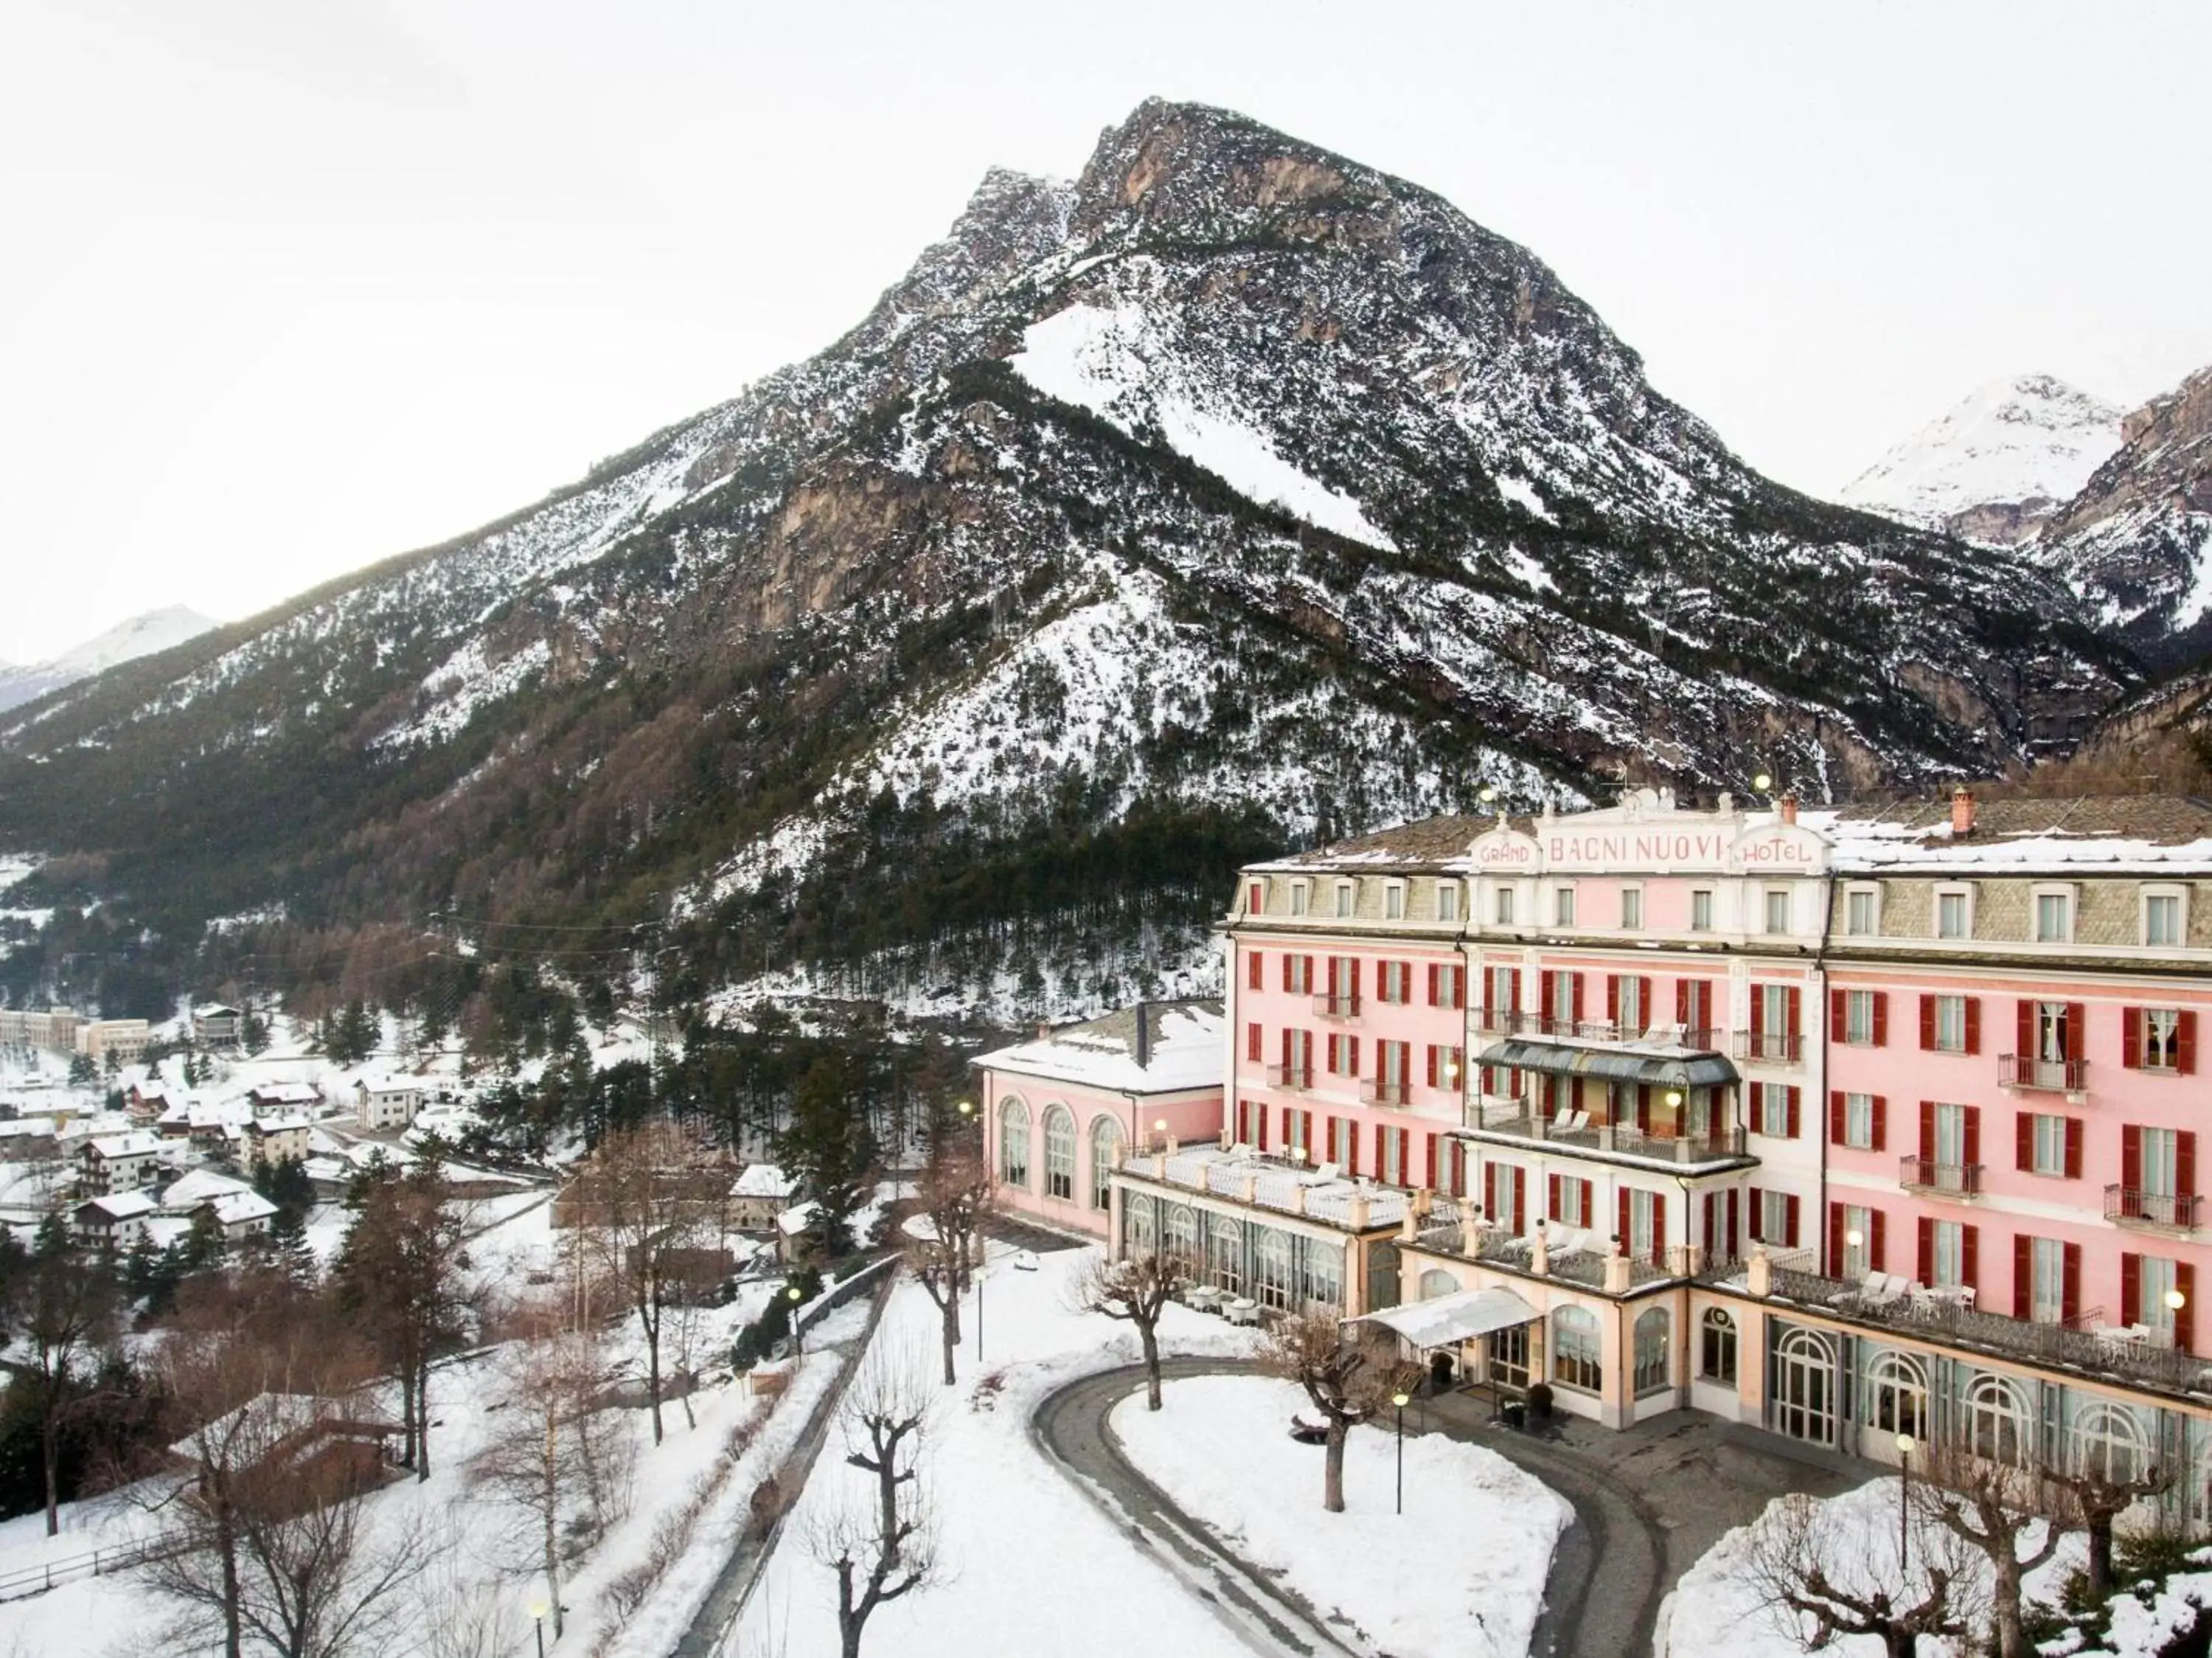 Property building, Winter in QC Terme Grand Hotel Bagni Nuovi